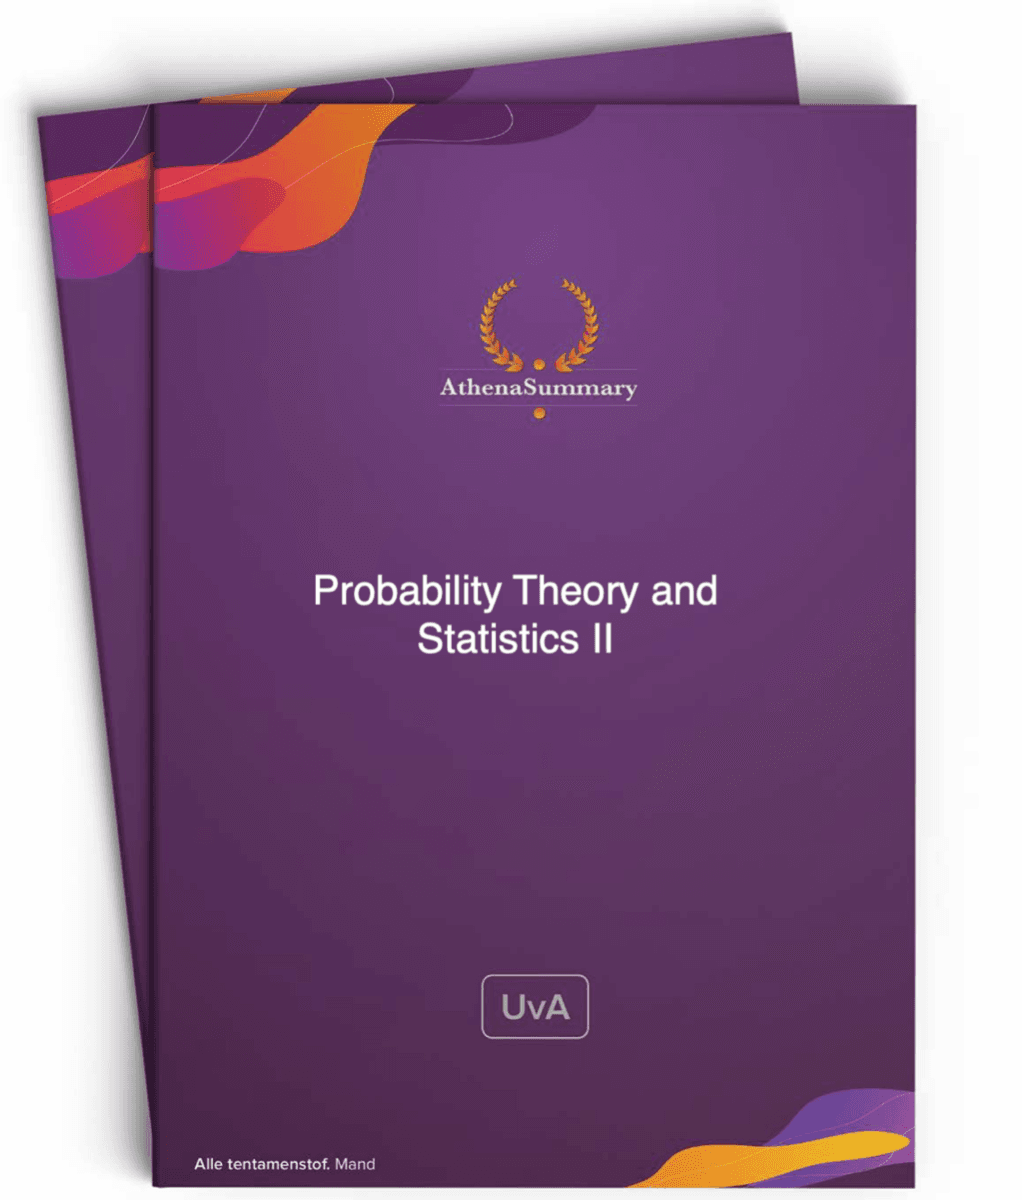 Literature Summary: Probability Theory and Statistics II